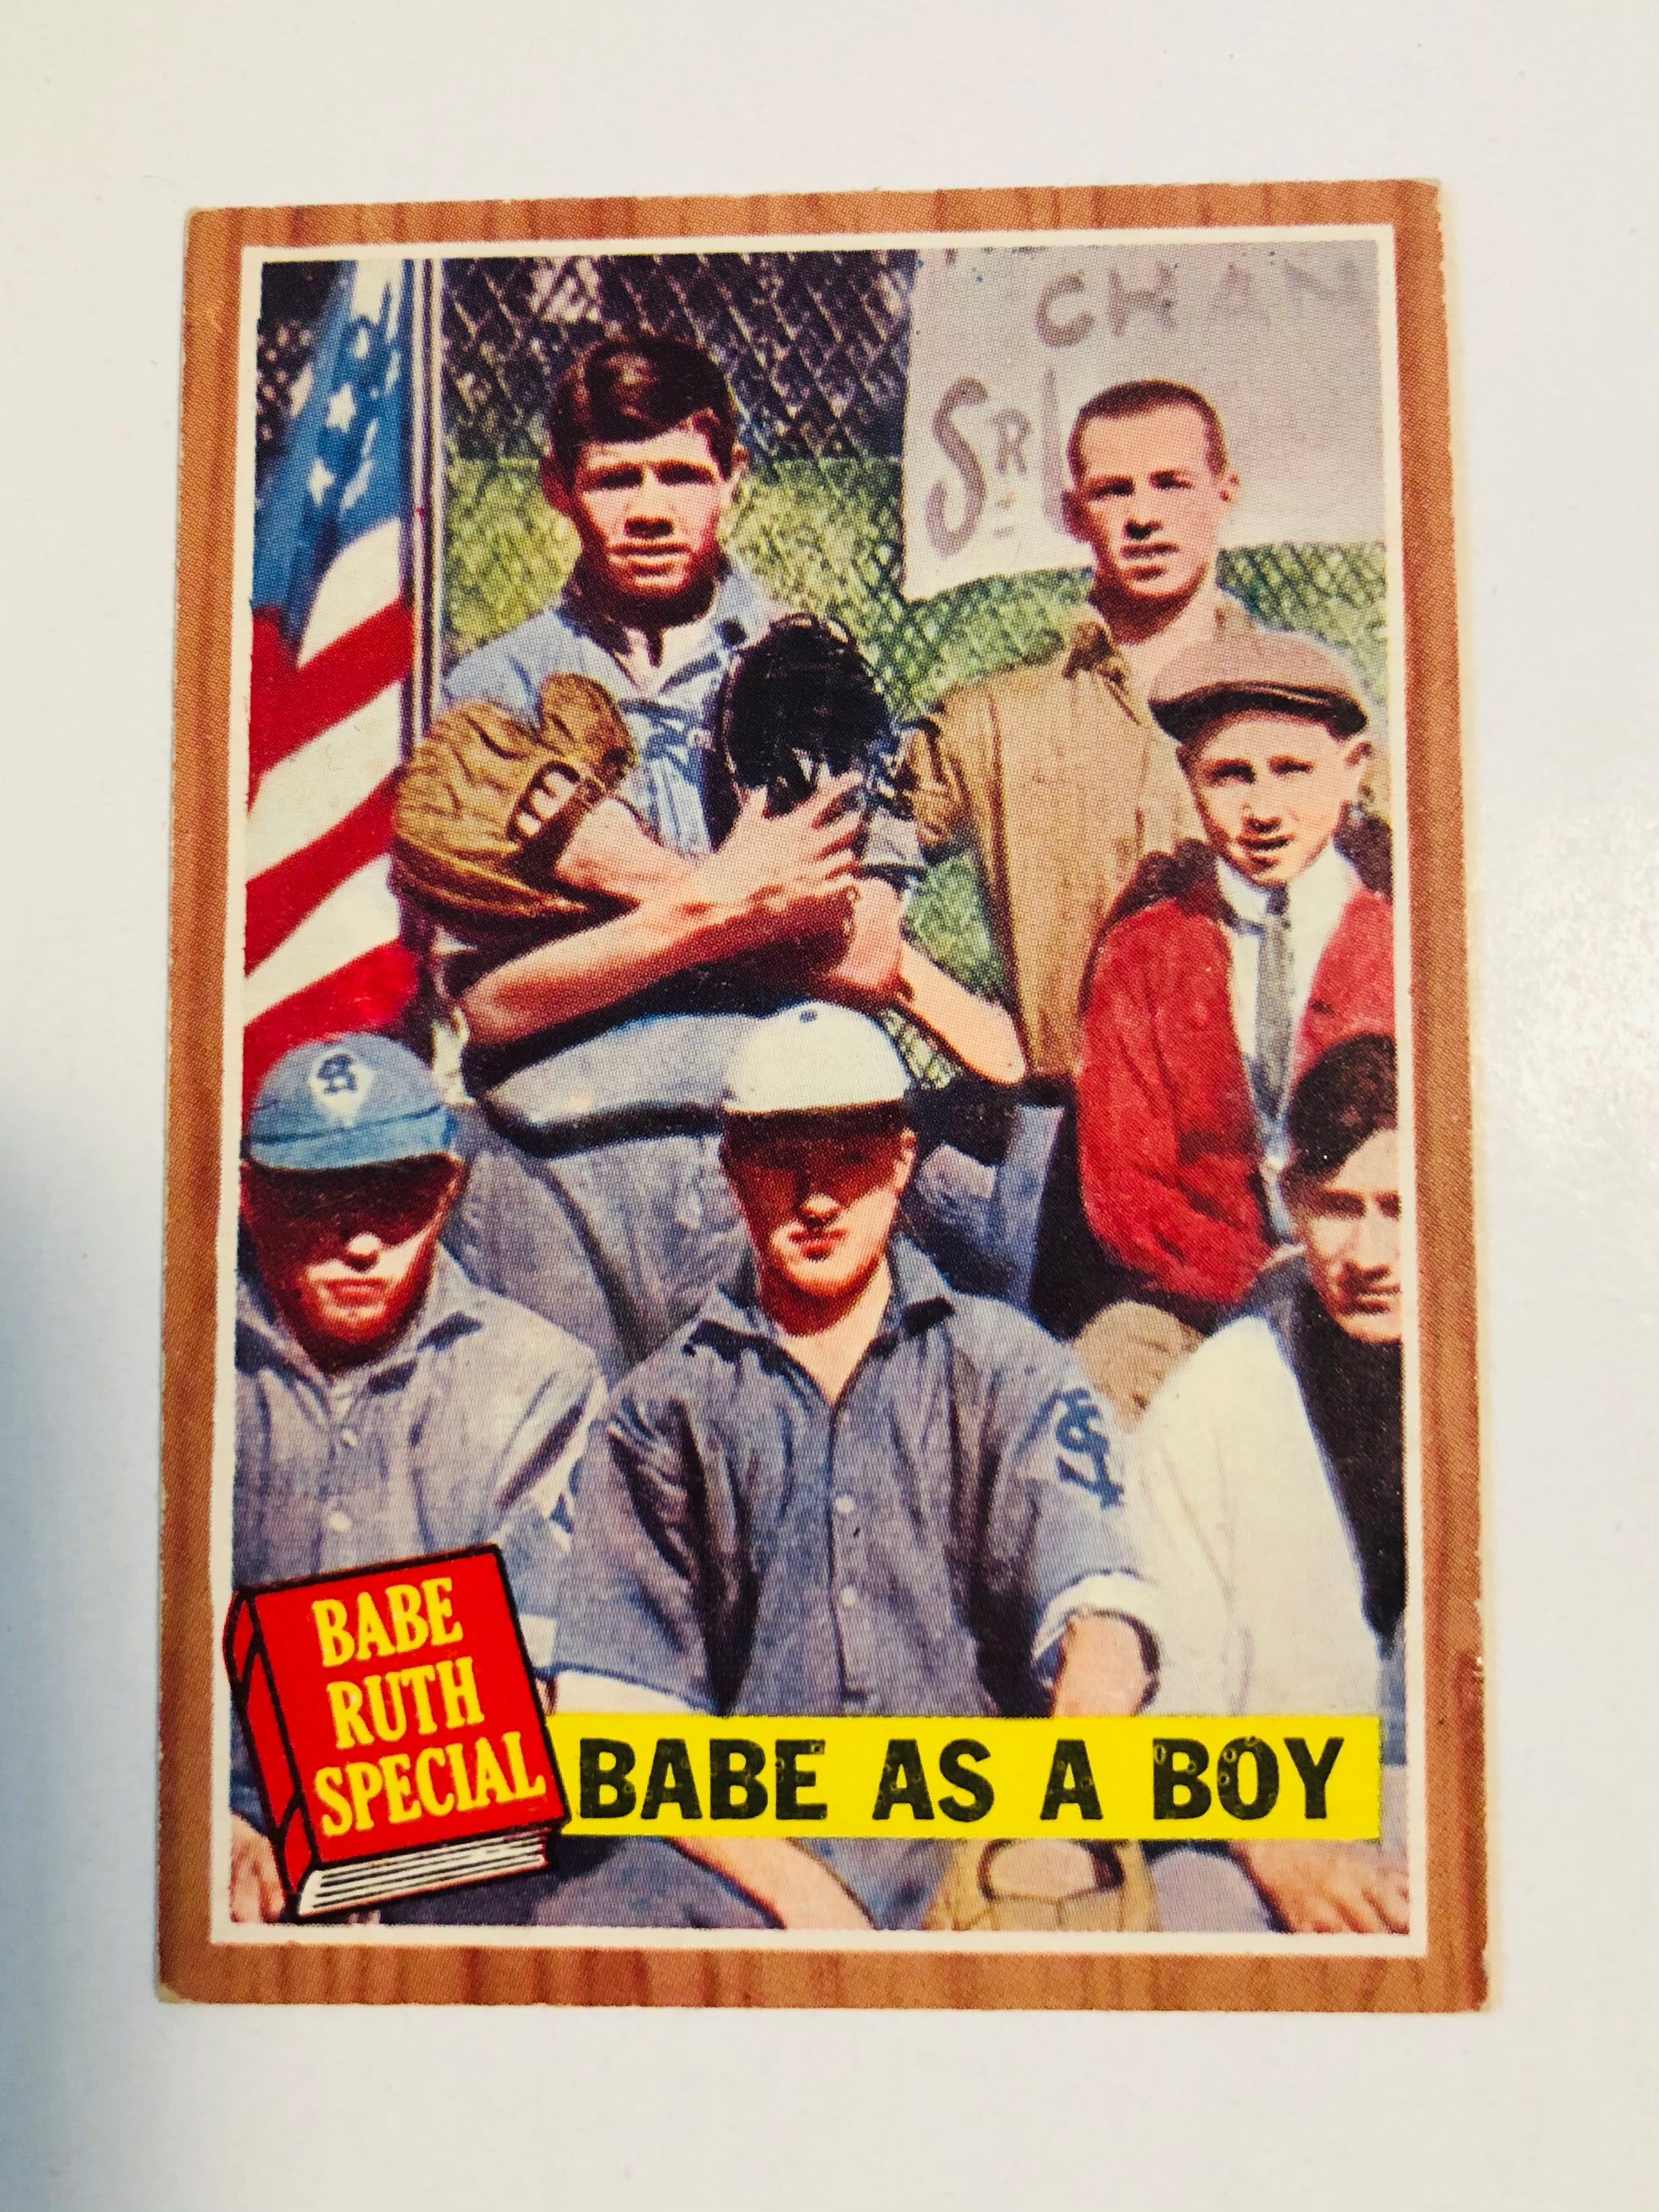 Babe Ruth Topps baseball card as a boy player 1960